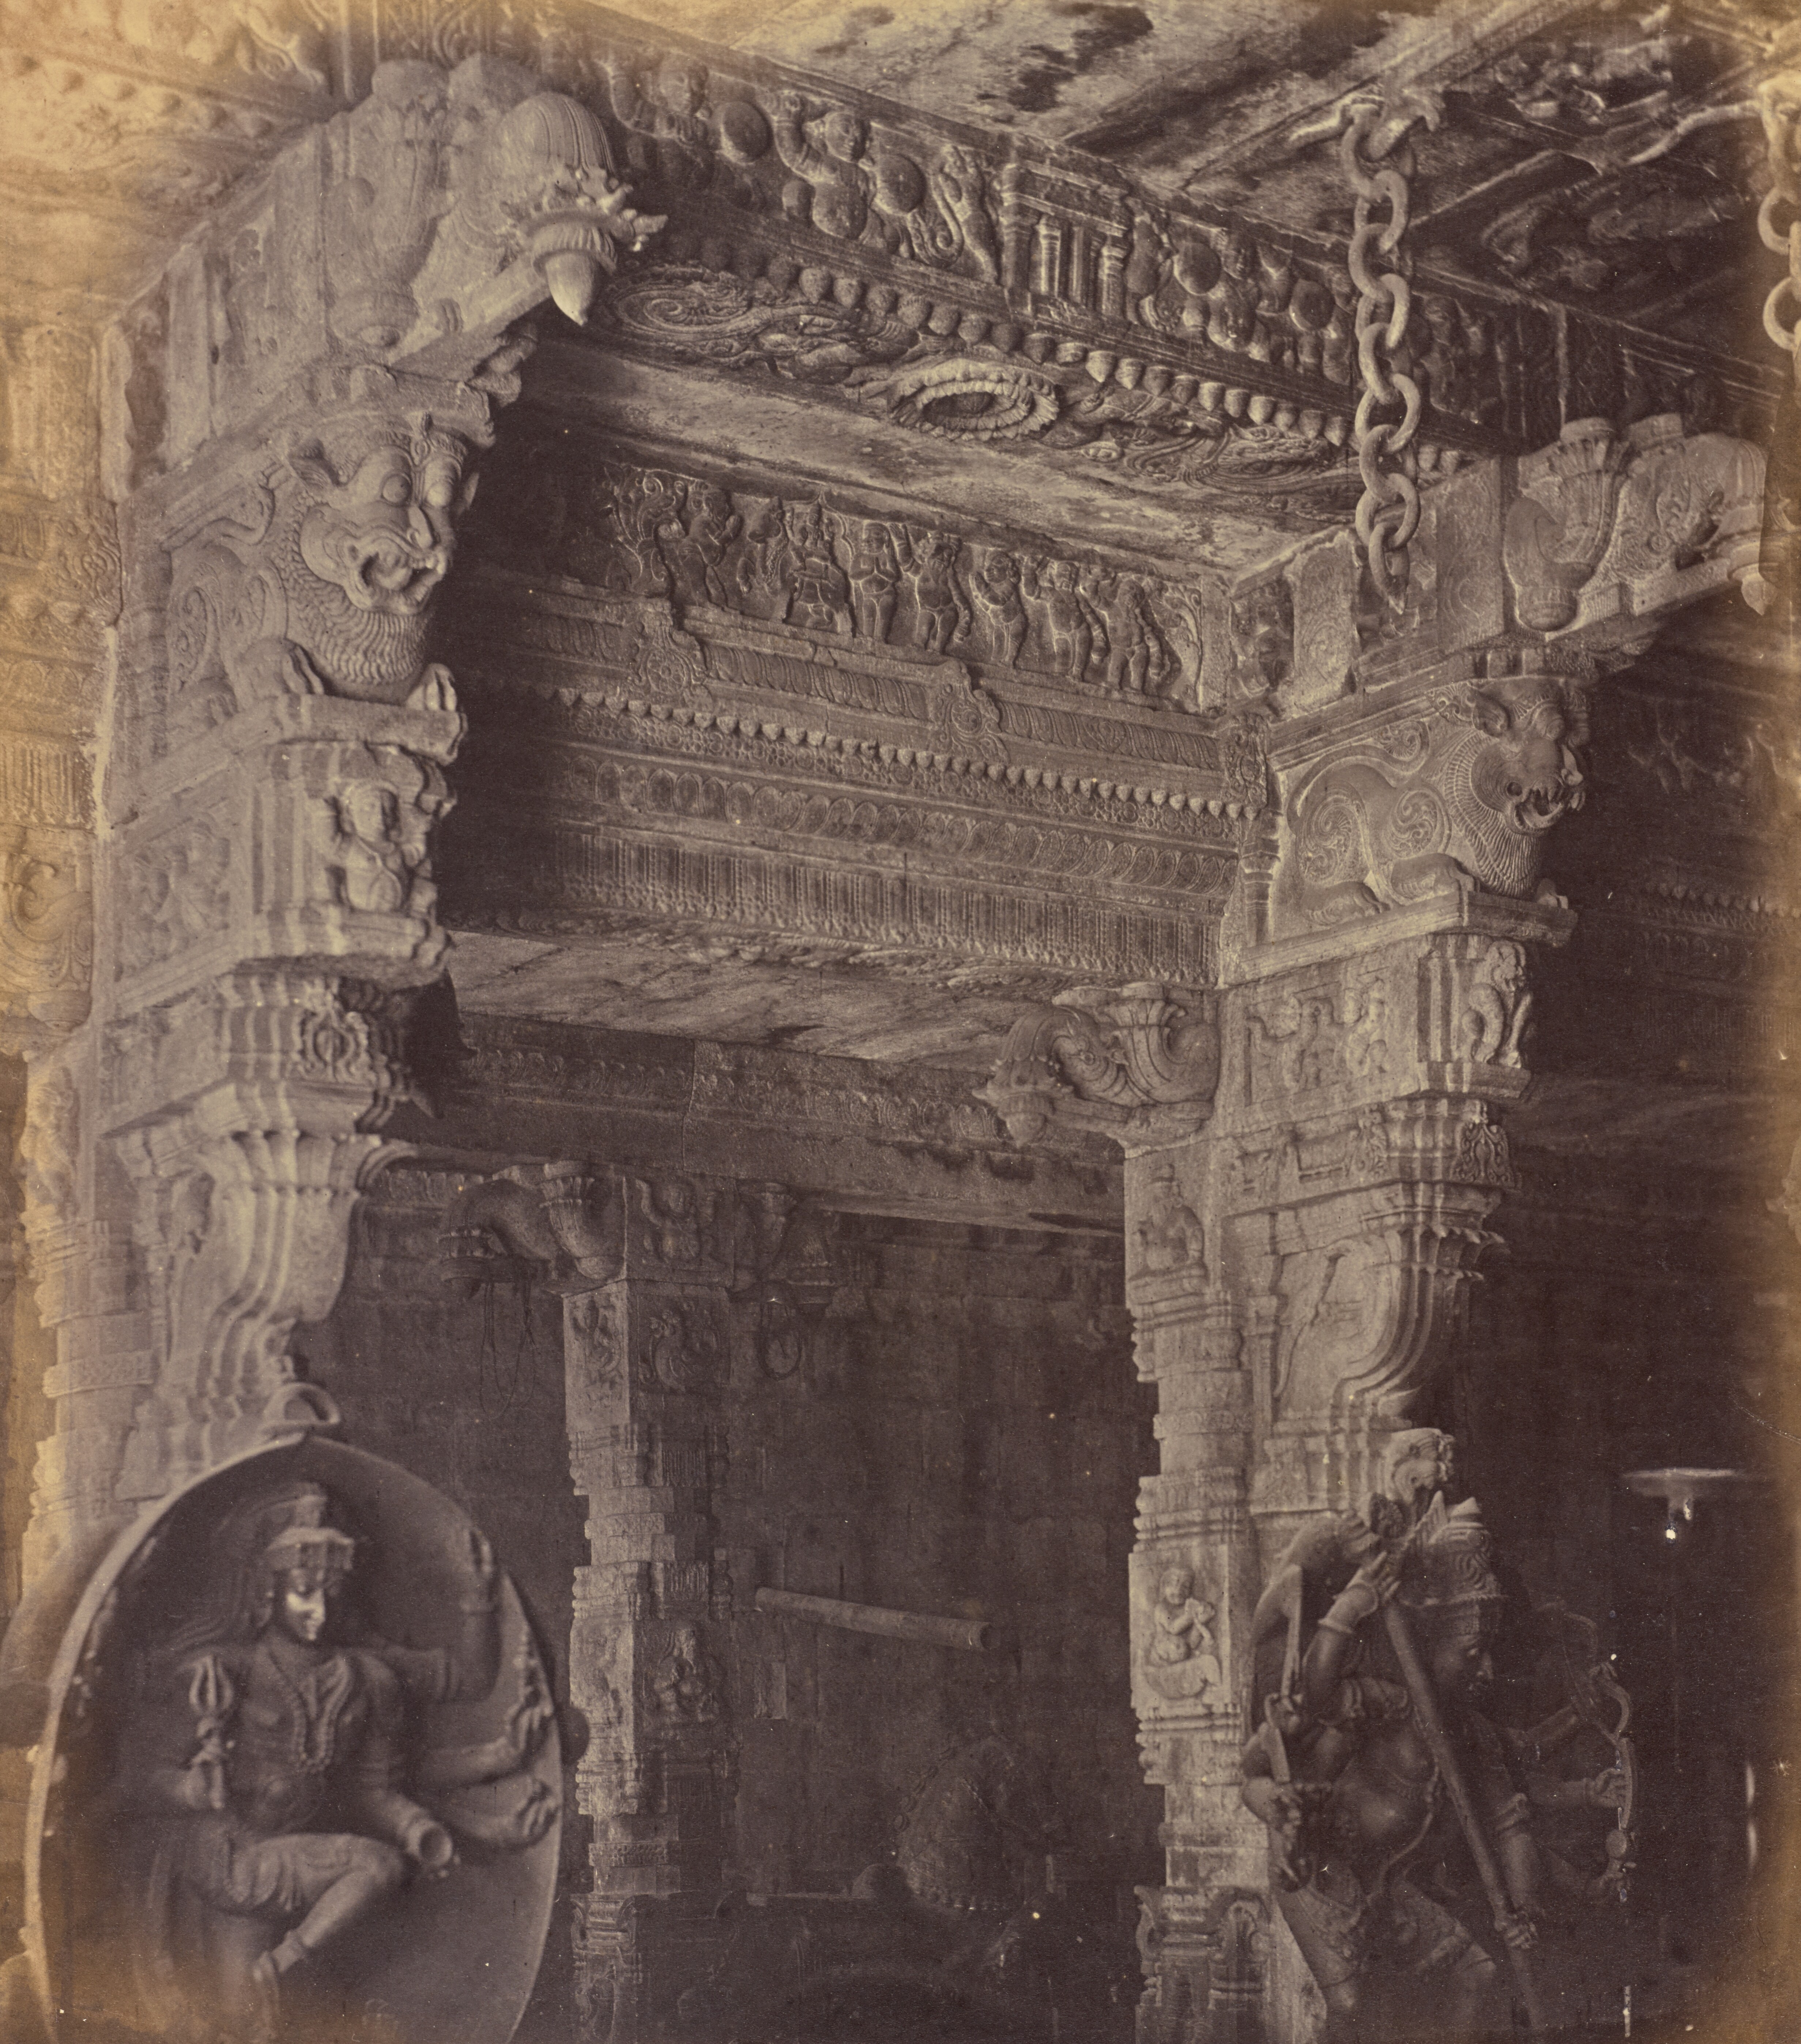 Perur Pateeswarar (Pattiswarar) Hindu Temple, Perur, Coimbatore, Tamil Nadu, India | Rare & Old Vintage Photos (1868)